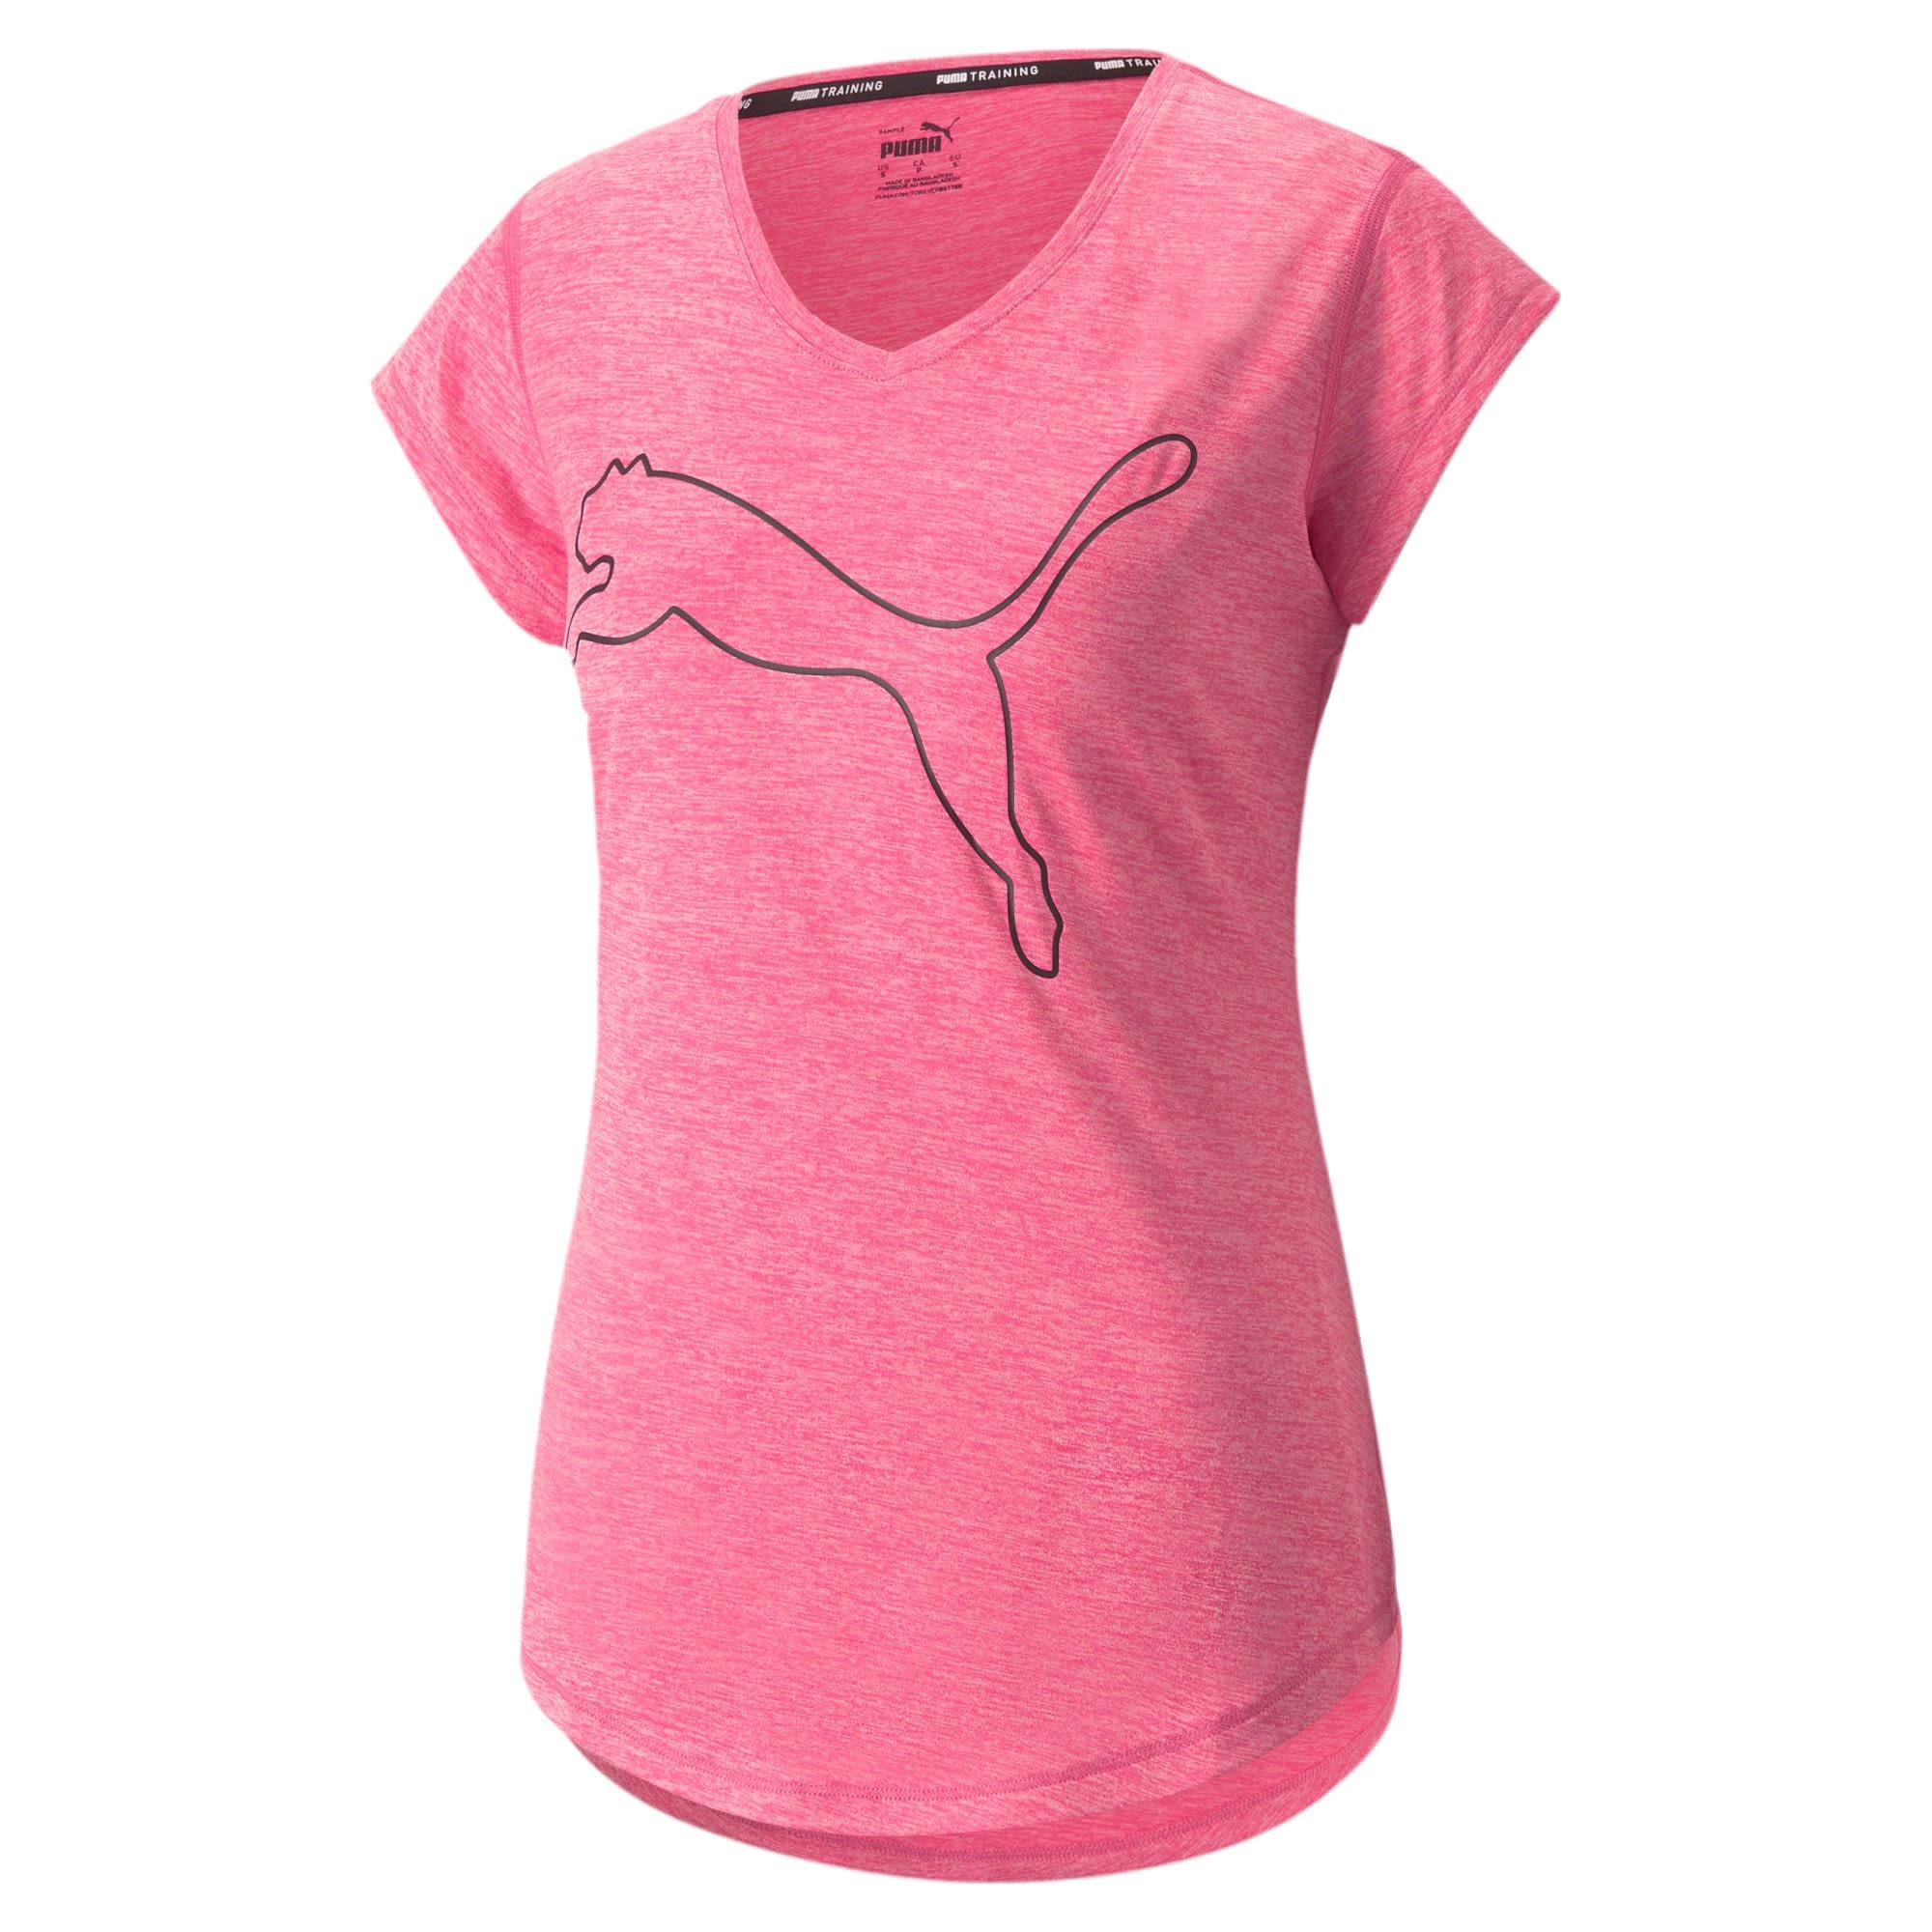 Puma Train Favorite Heather CAT Tee Pink- Female Kurzarm-Shirts- Grsse M - Farbe Sunset Pink Heather - Outline Cat